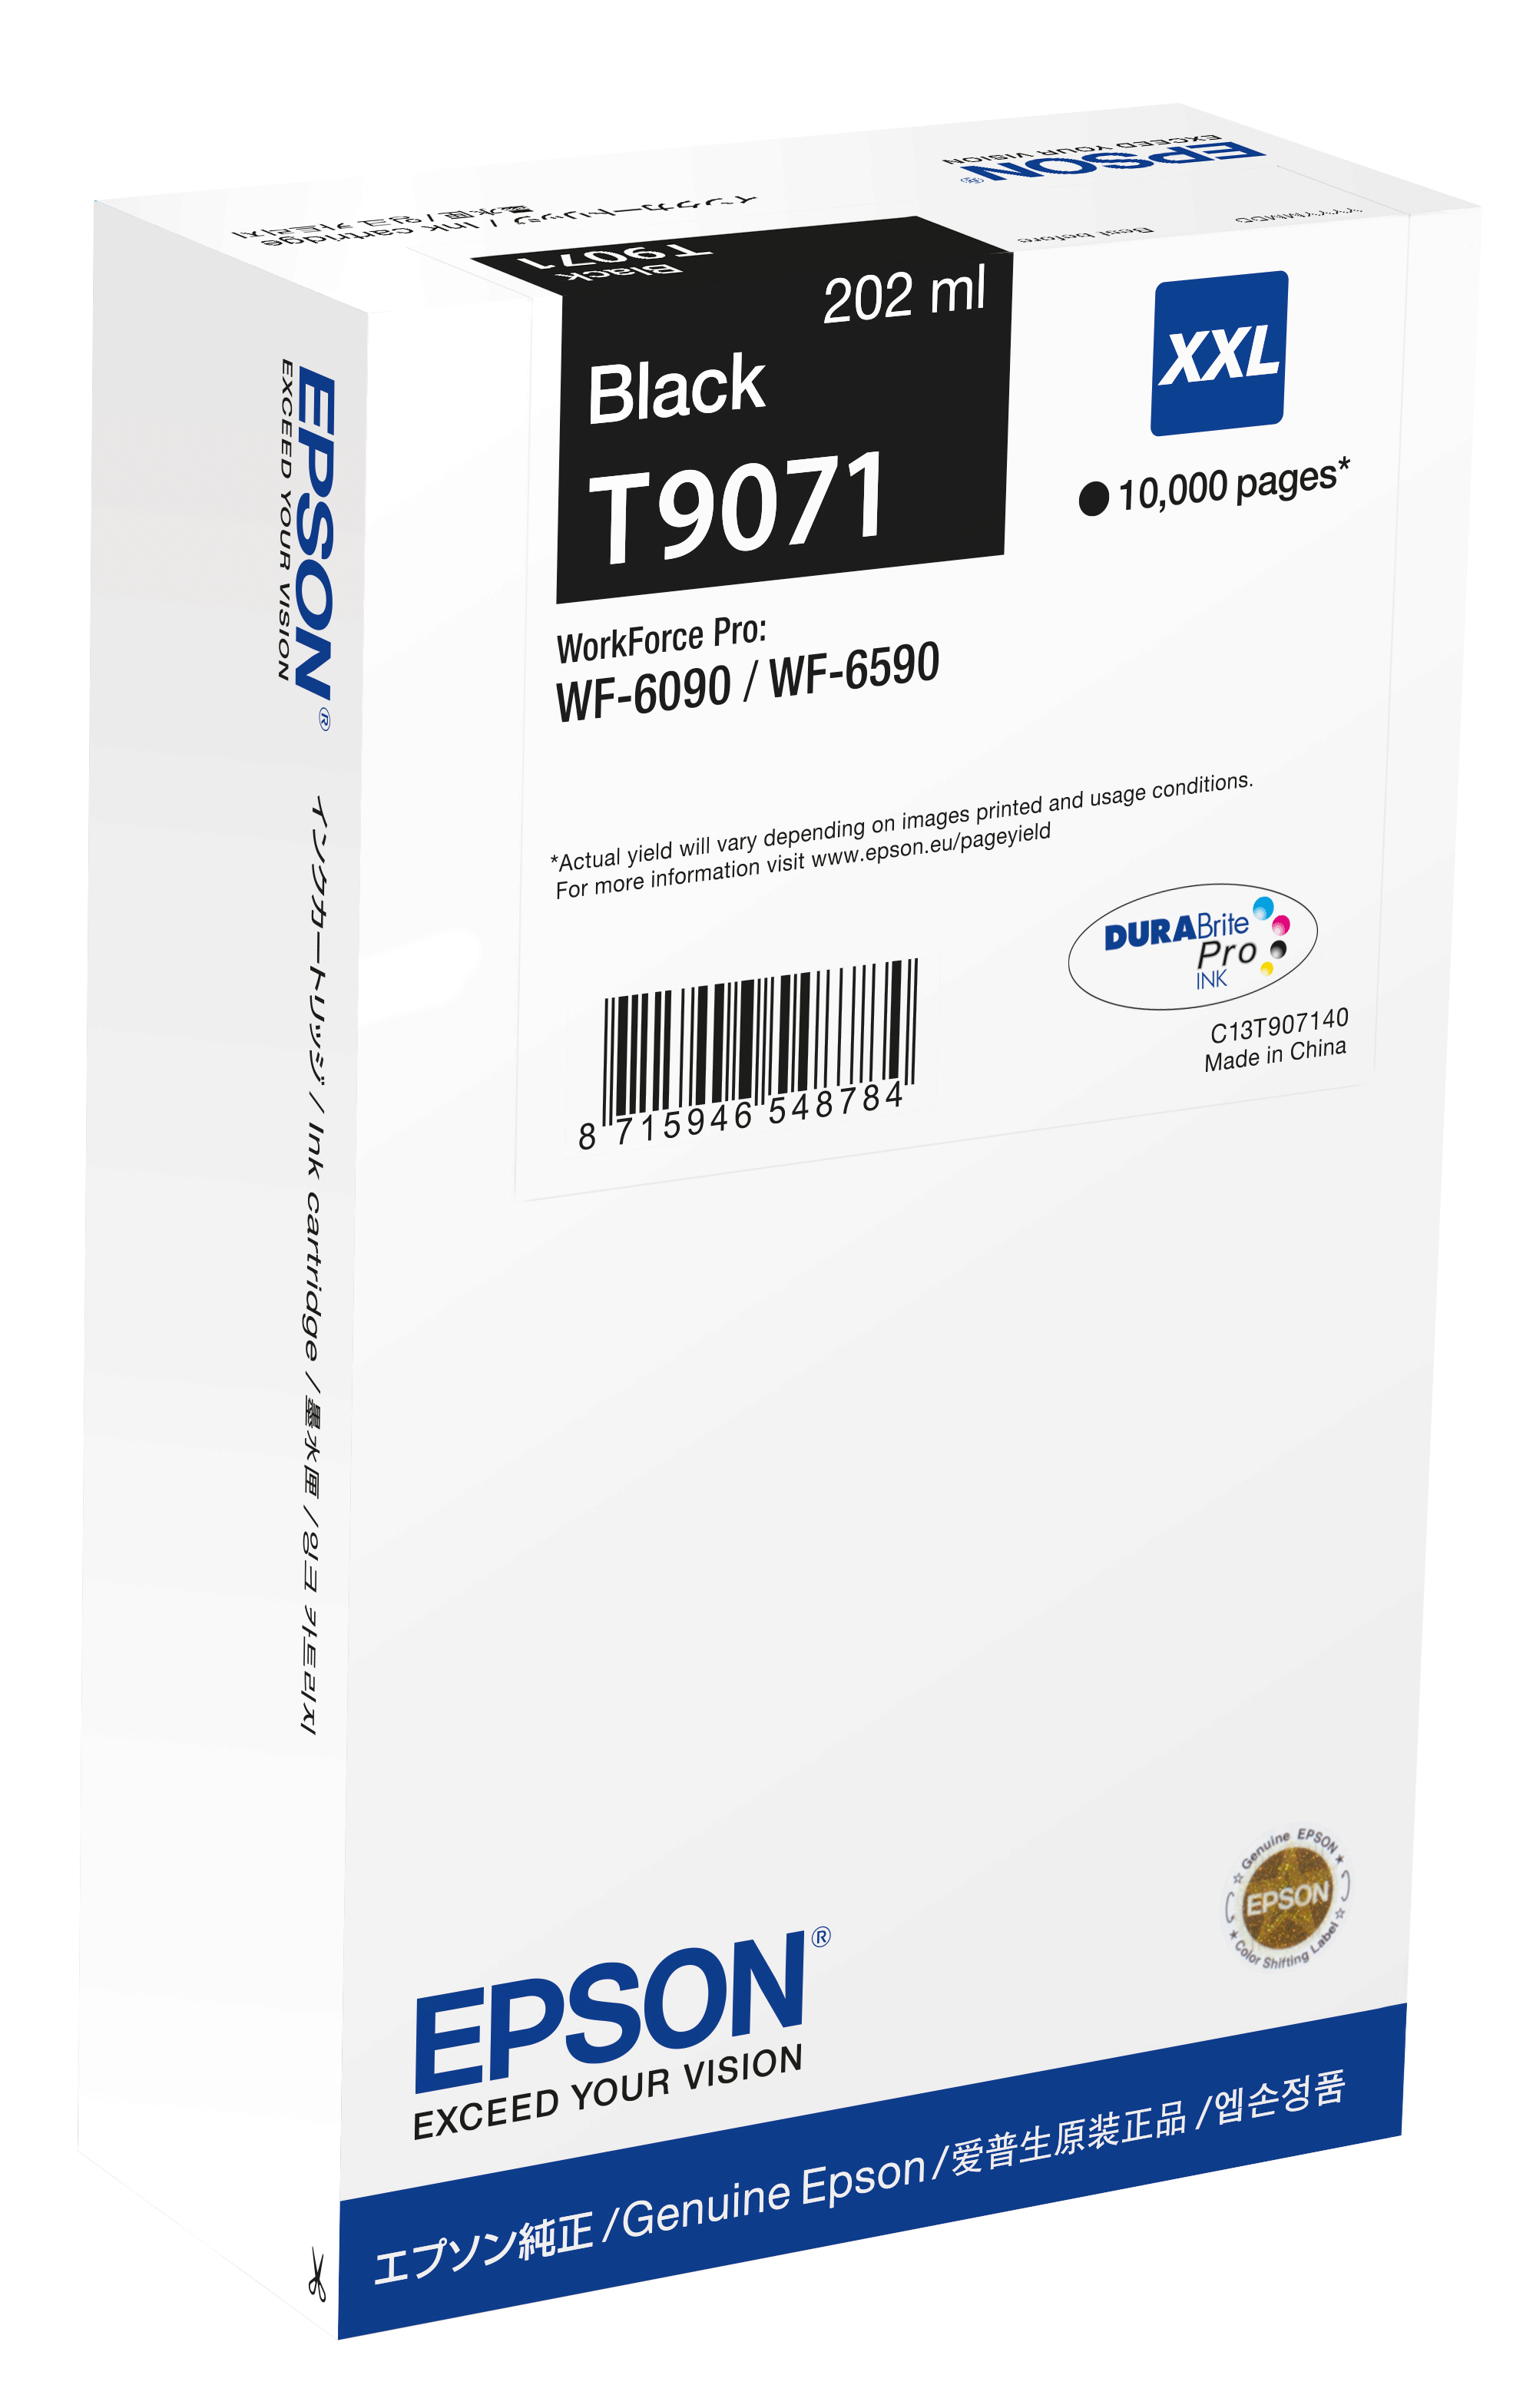 Epson WF-6xxx Ink Cartridge Black XXL | Epson WorkForce Pro WF-6590DTWFC/ WorkForce Pro WF-6590D2TWFC/ WF-6590D2TWFC/ WF-6590DTWFC/ WF-6590DWF/ WorkFo